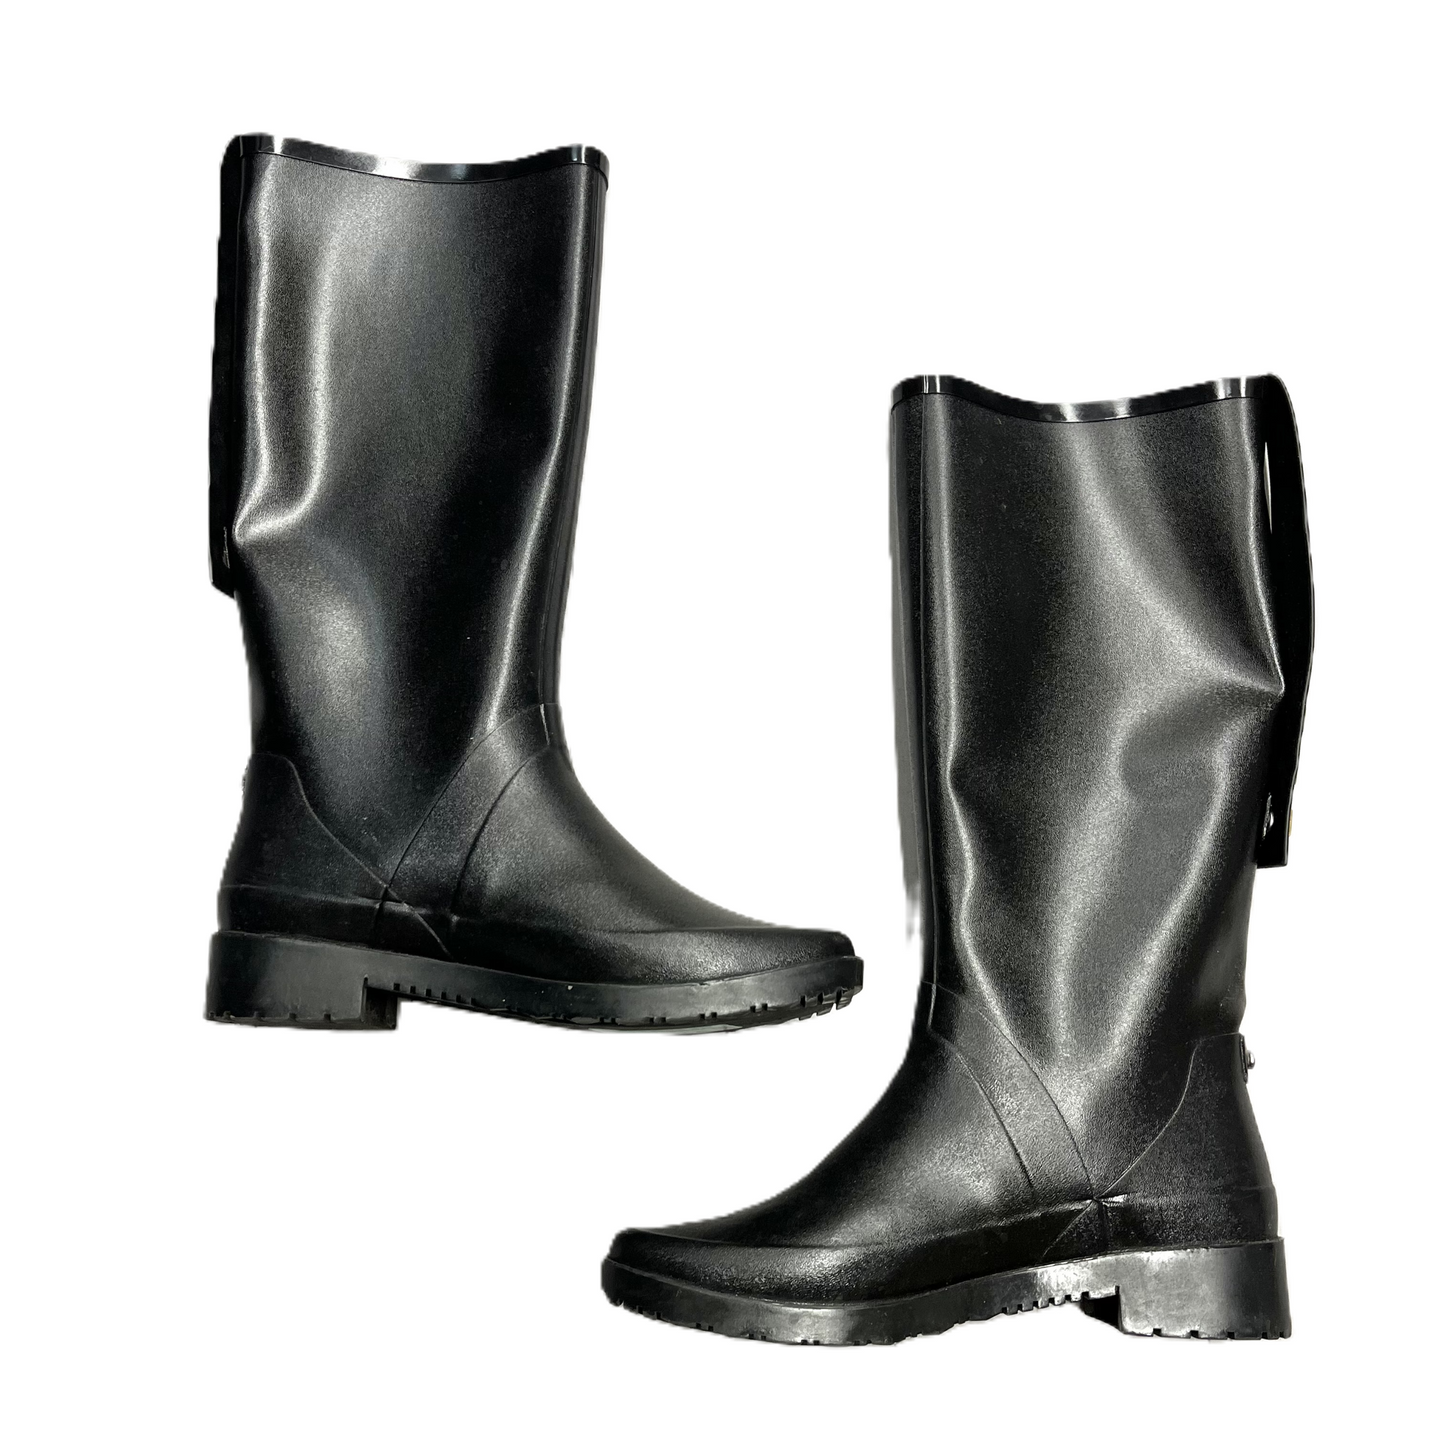 Boots Designer By Stuart Weitzman  Size: 8